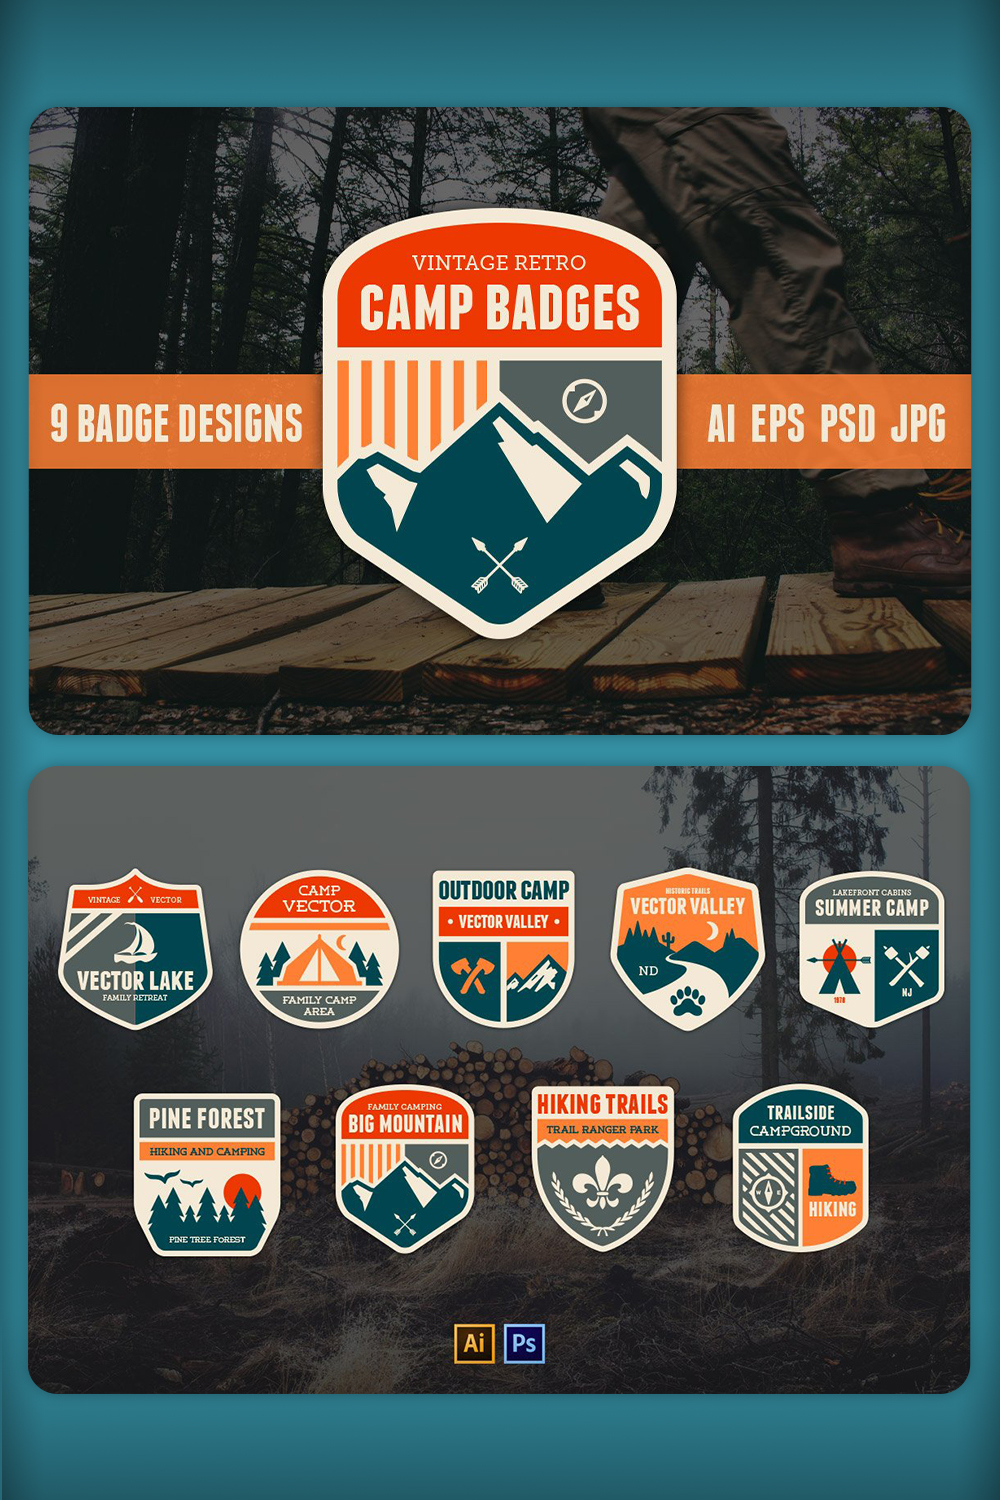 Retro Camp Badges Pinterest image.